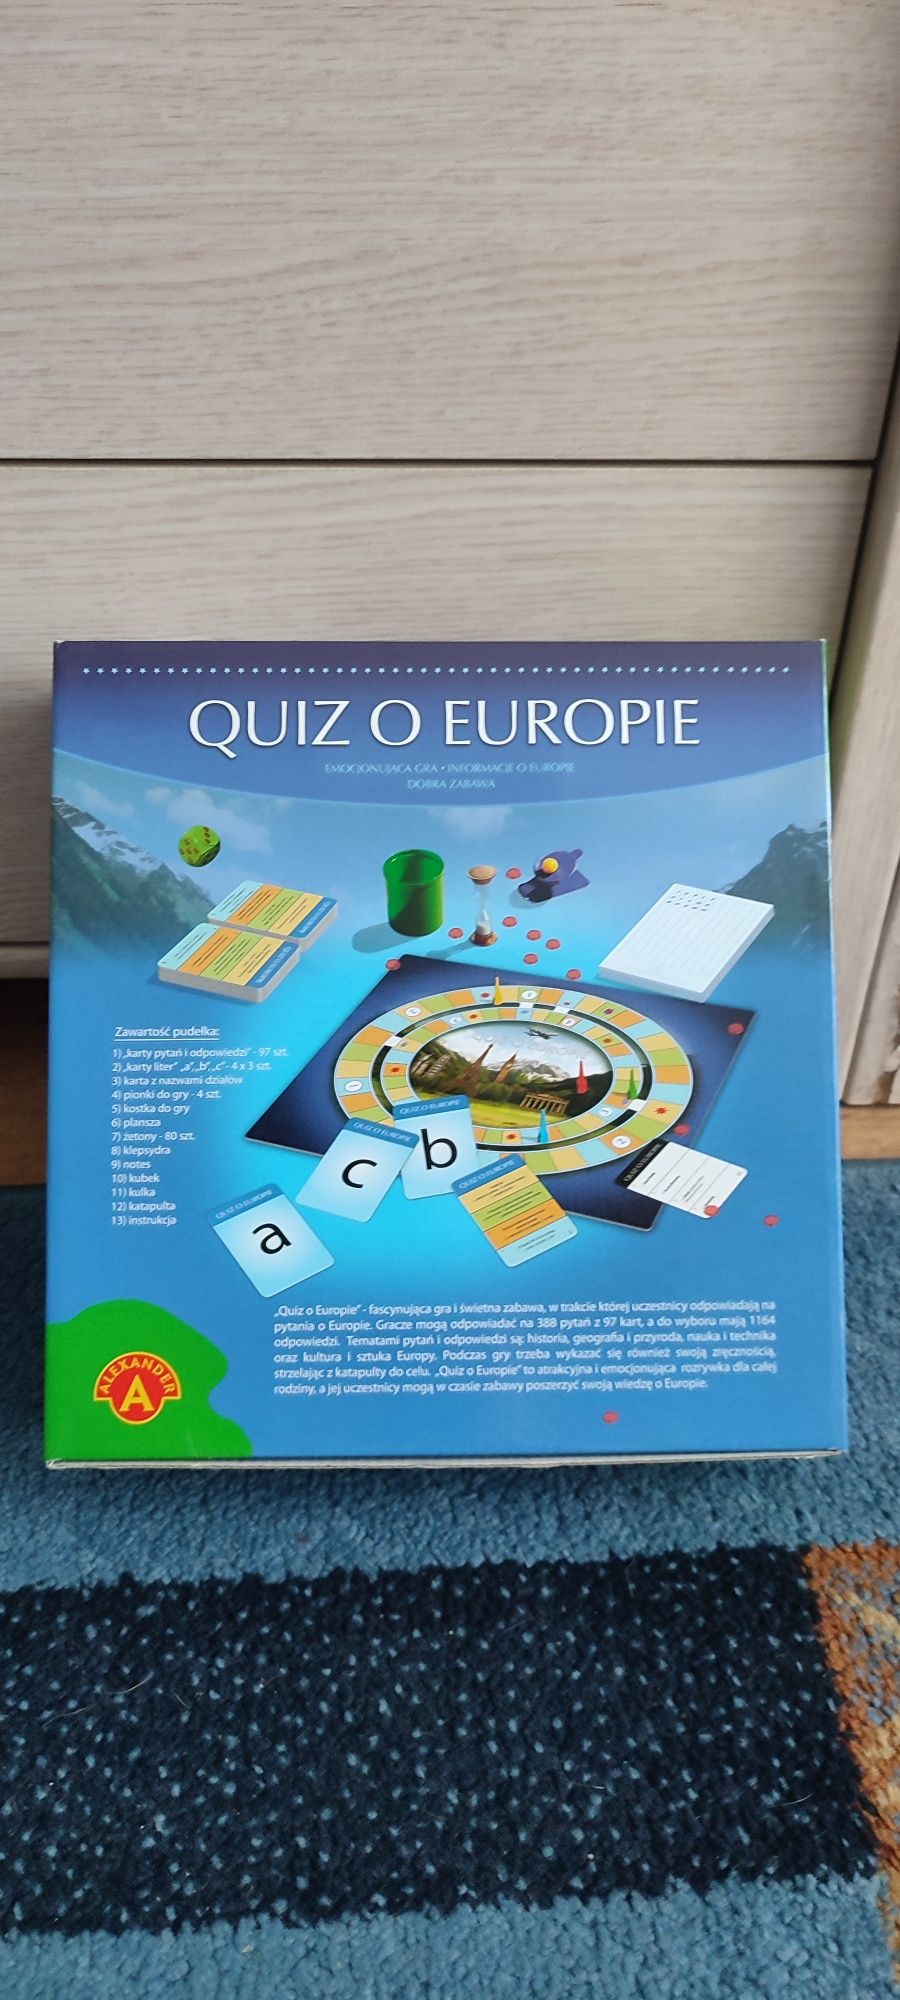 Nowa gra Quiz o Europie Alexander 388 pytań, 110 kart